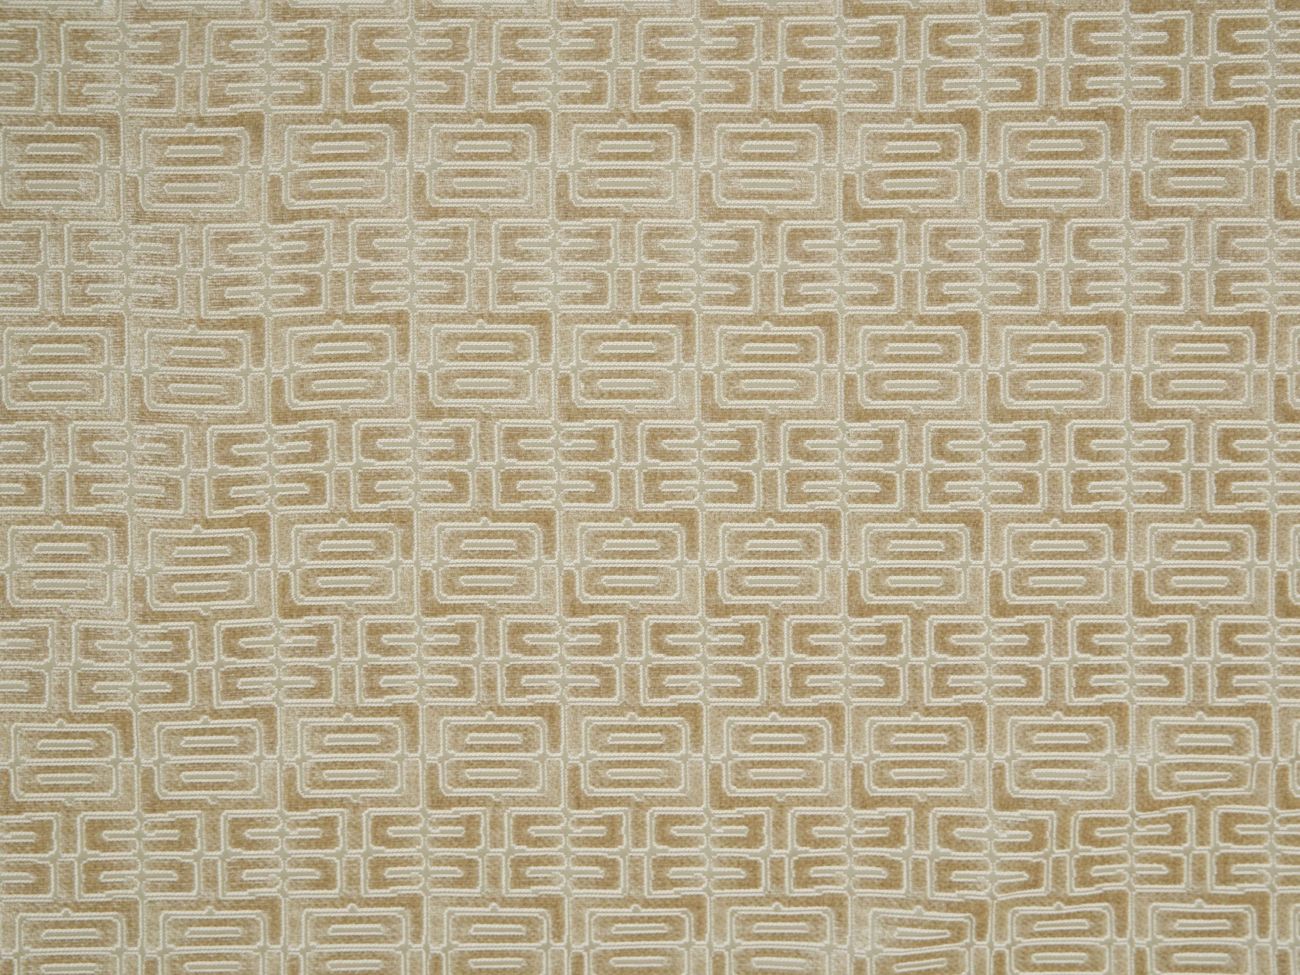 Ткань для оибвки мебели Labyrinth velvet от Jim Thompson.